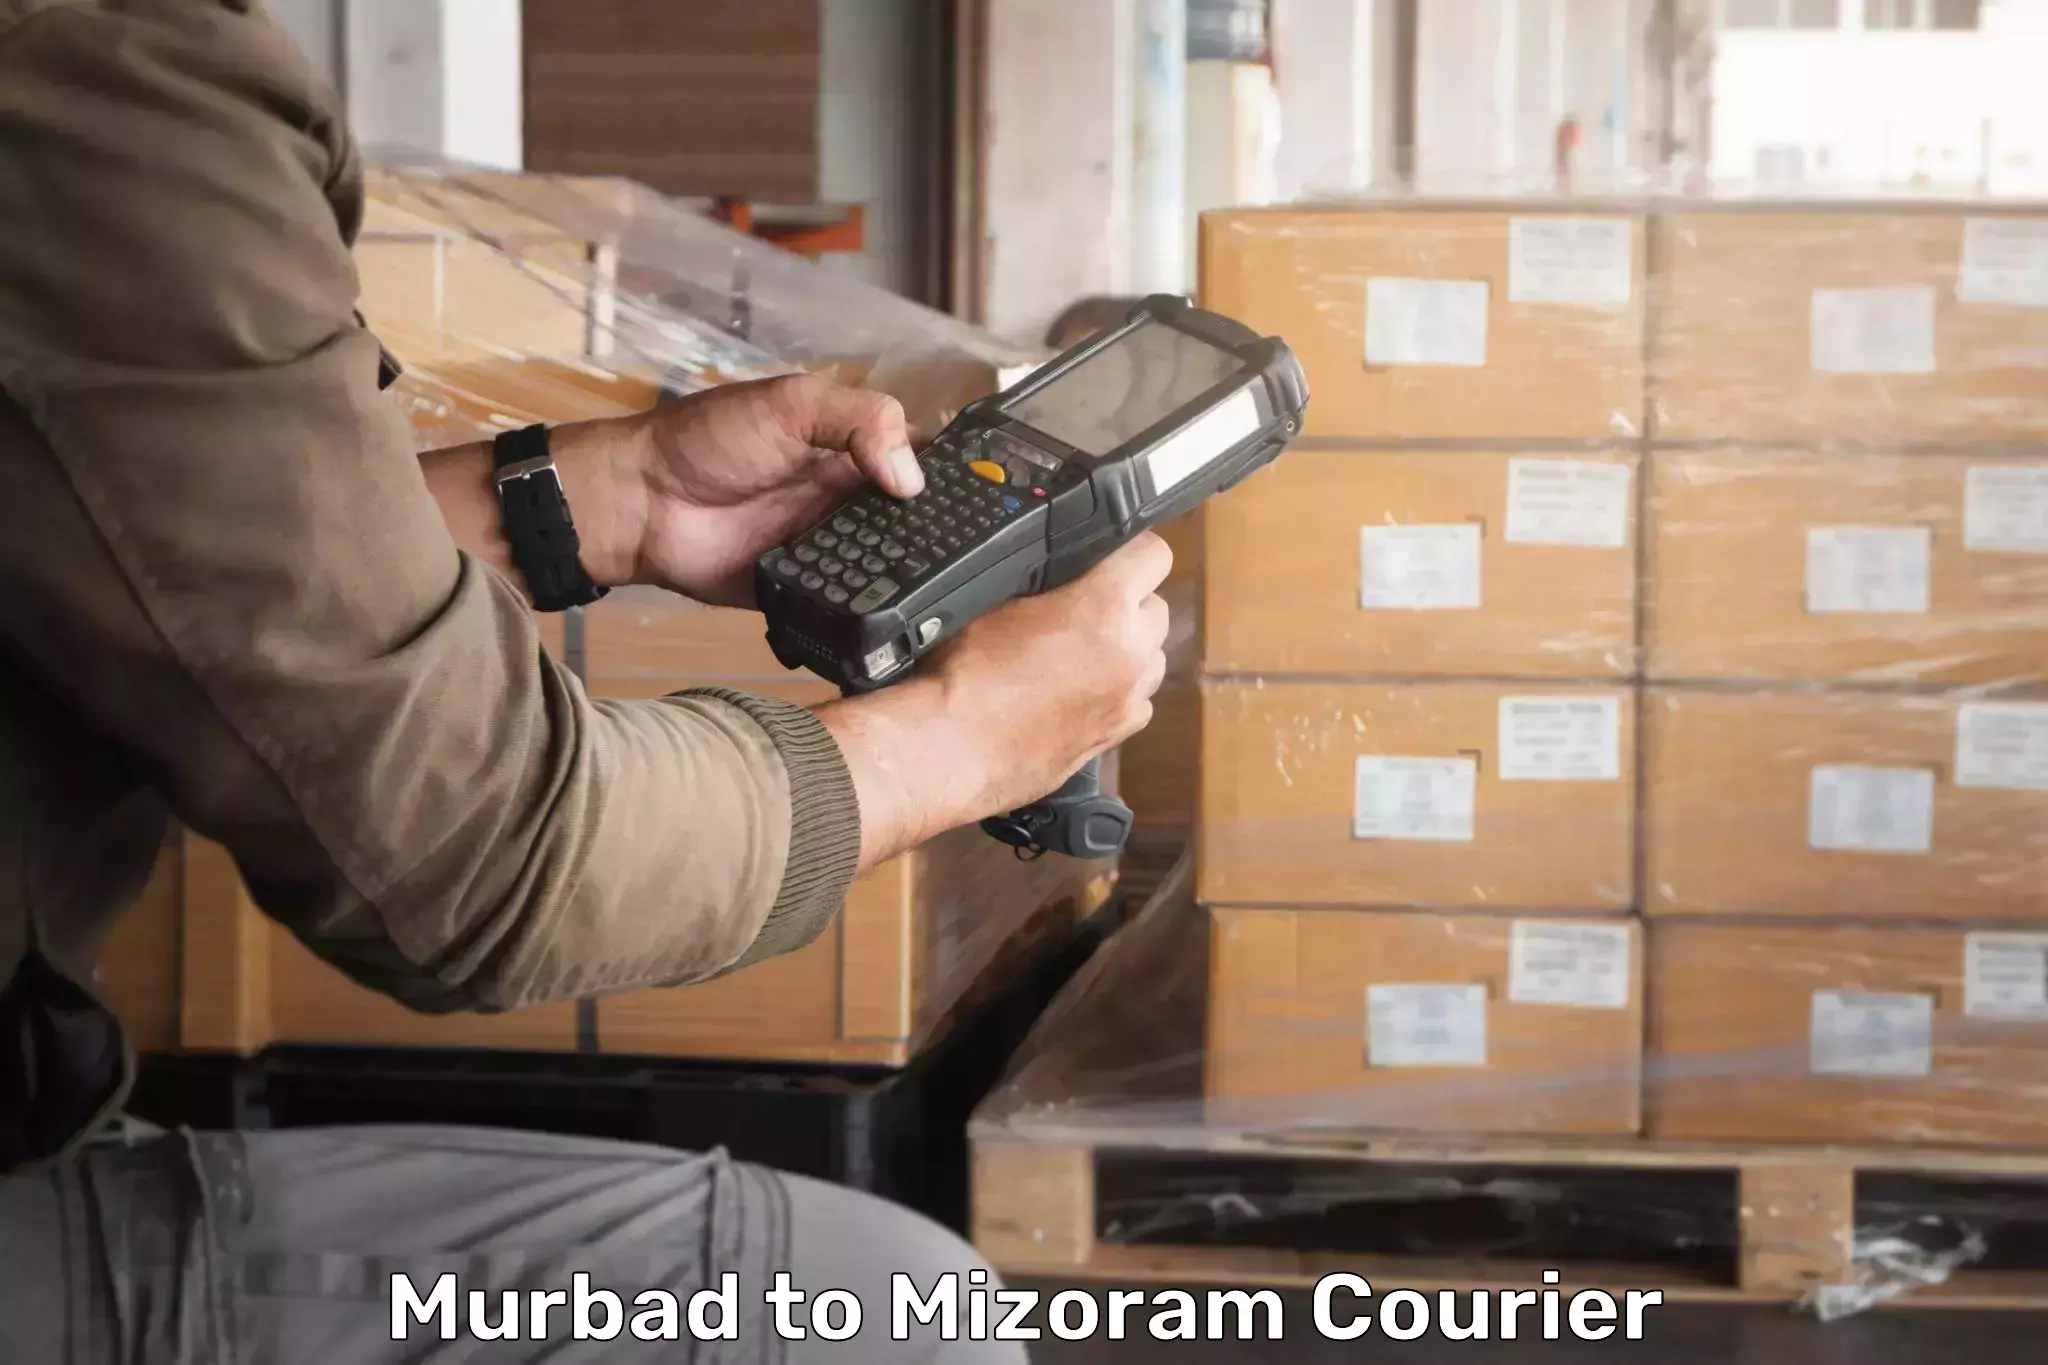 Global logistics network Murbad to Mizoram